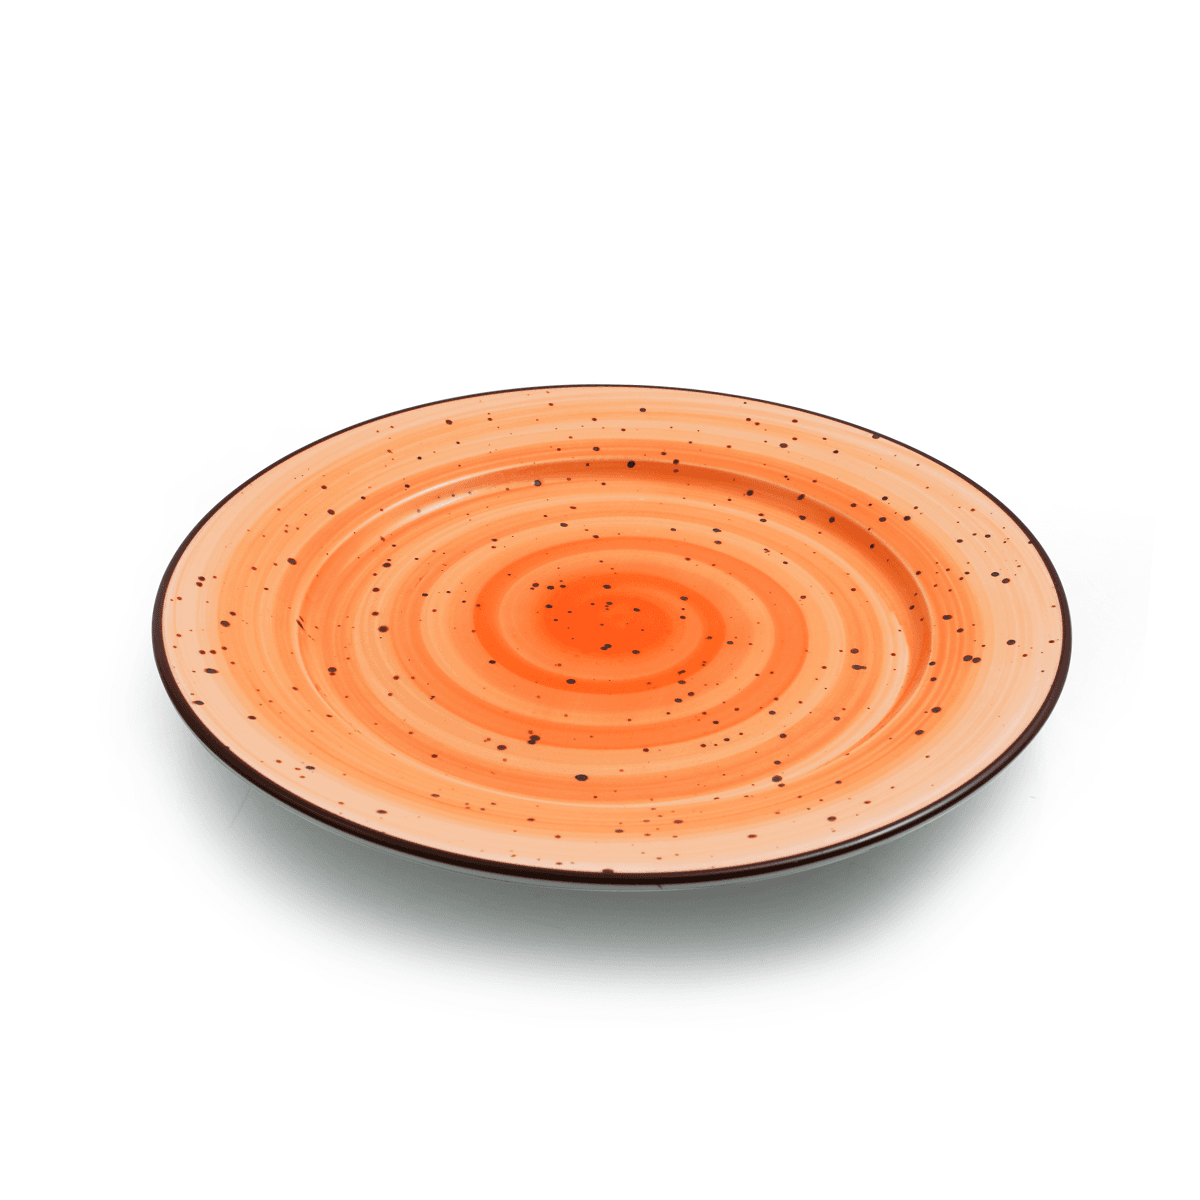 صحن تقديم مسطح بورسلان 9 بوصة برتقالي بورسليتا Porceletta Glazed Porcelain Flat Plate